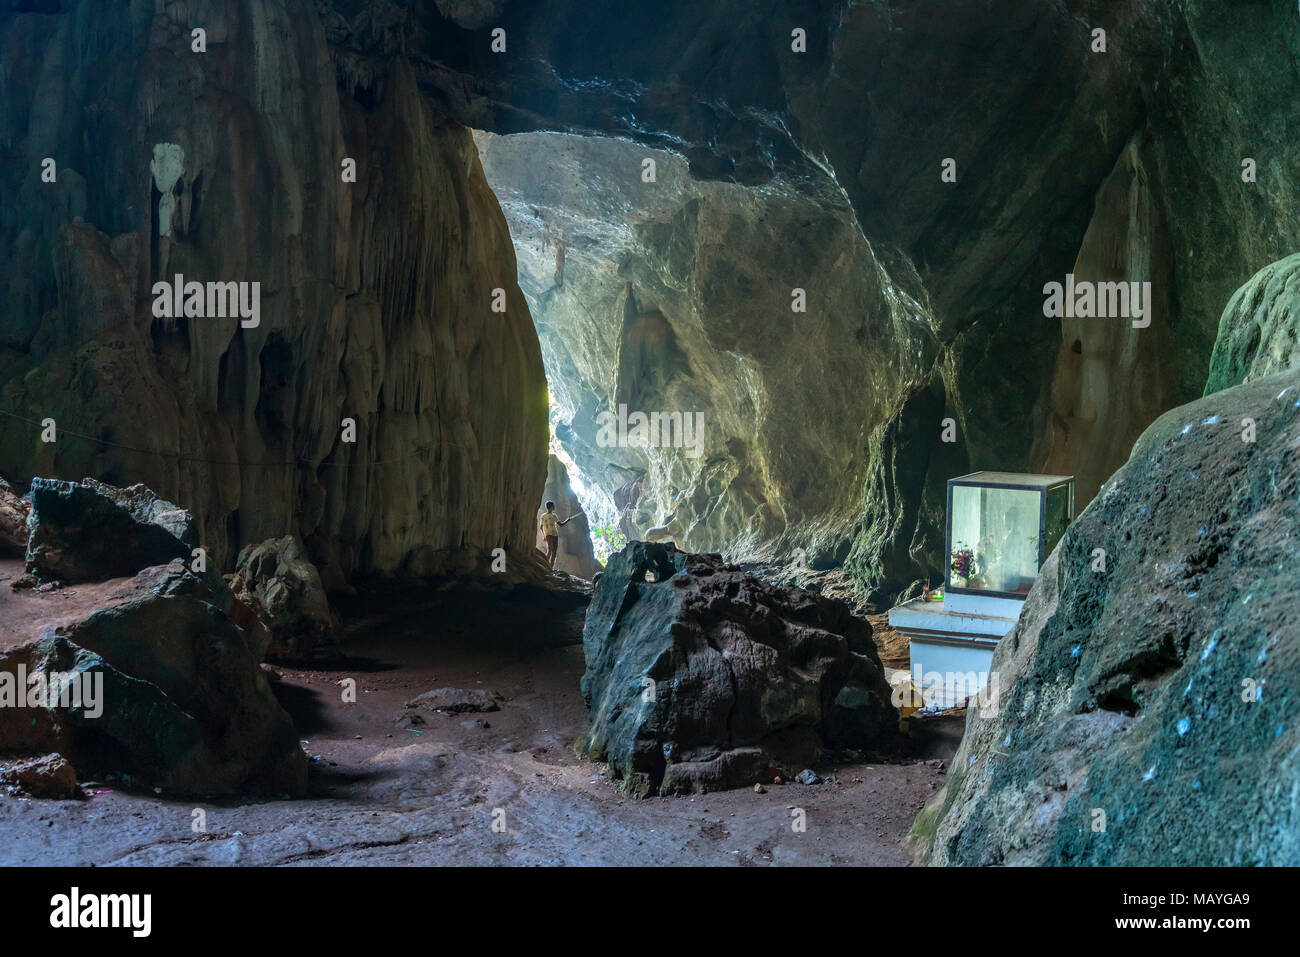 Saddan-Höhle, di Hpa-an, Myanmar, Asien | Saddar grotta, di Hpa-an, Myanmar, Asia Foto Stock